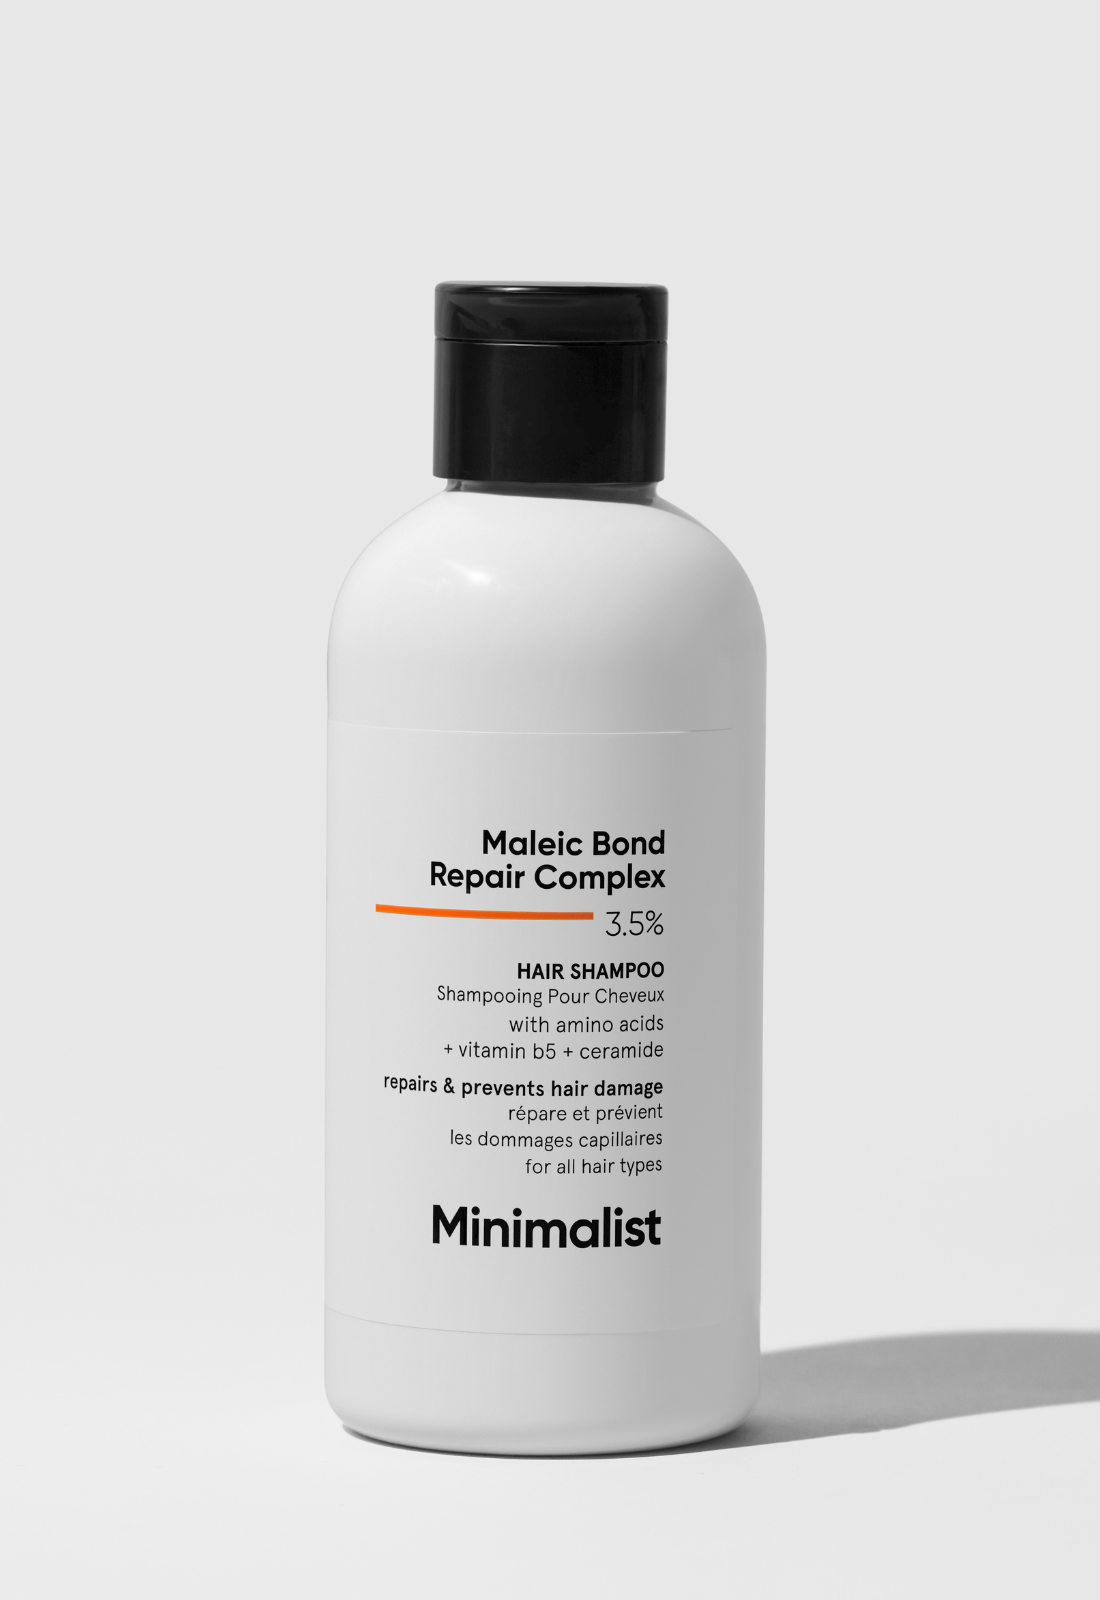 Minimalist Maleic Bond Repair Complex 3.5% Hair Shampoo Beautiful